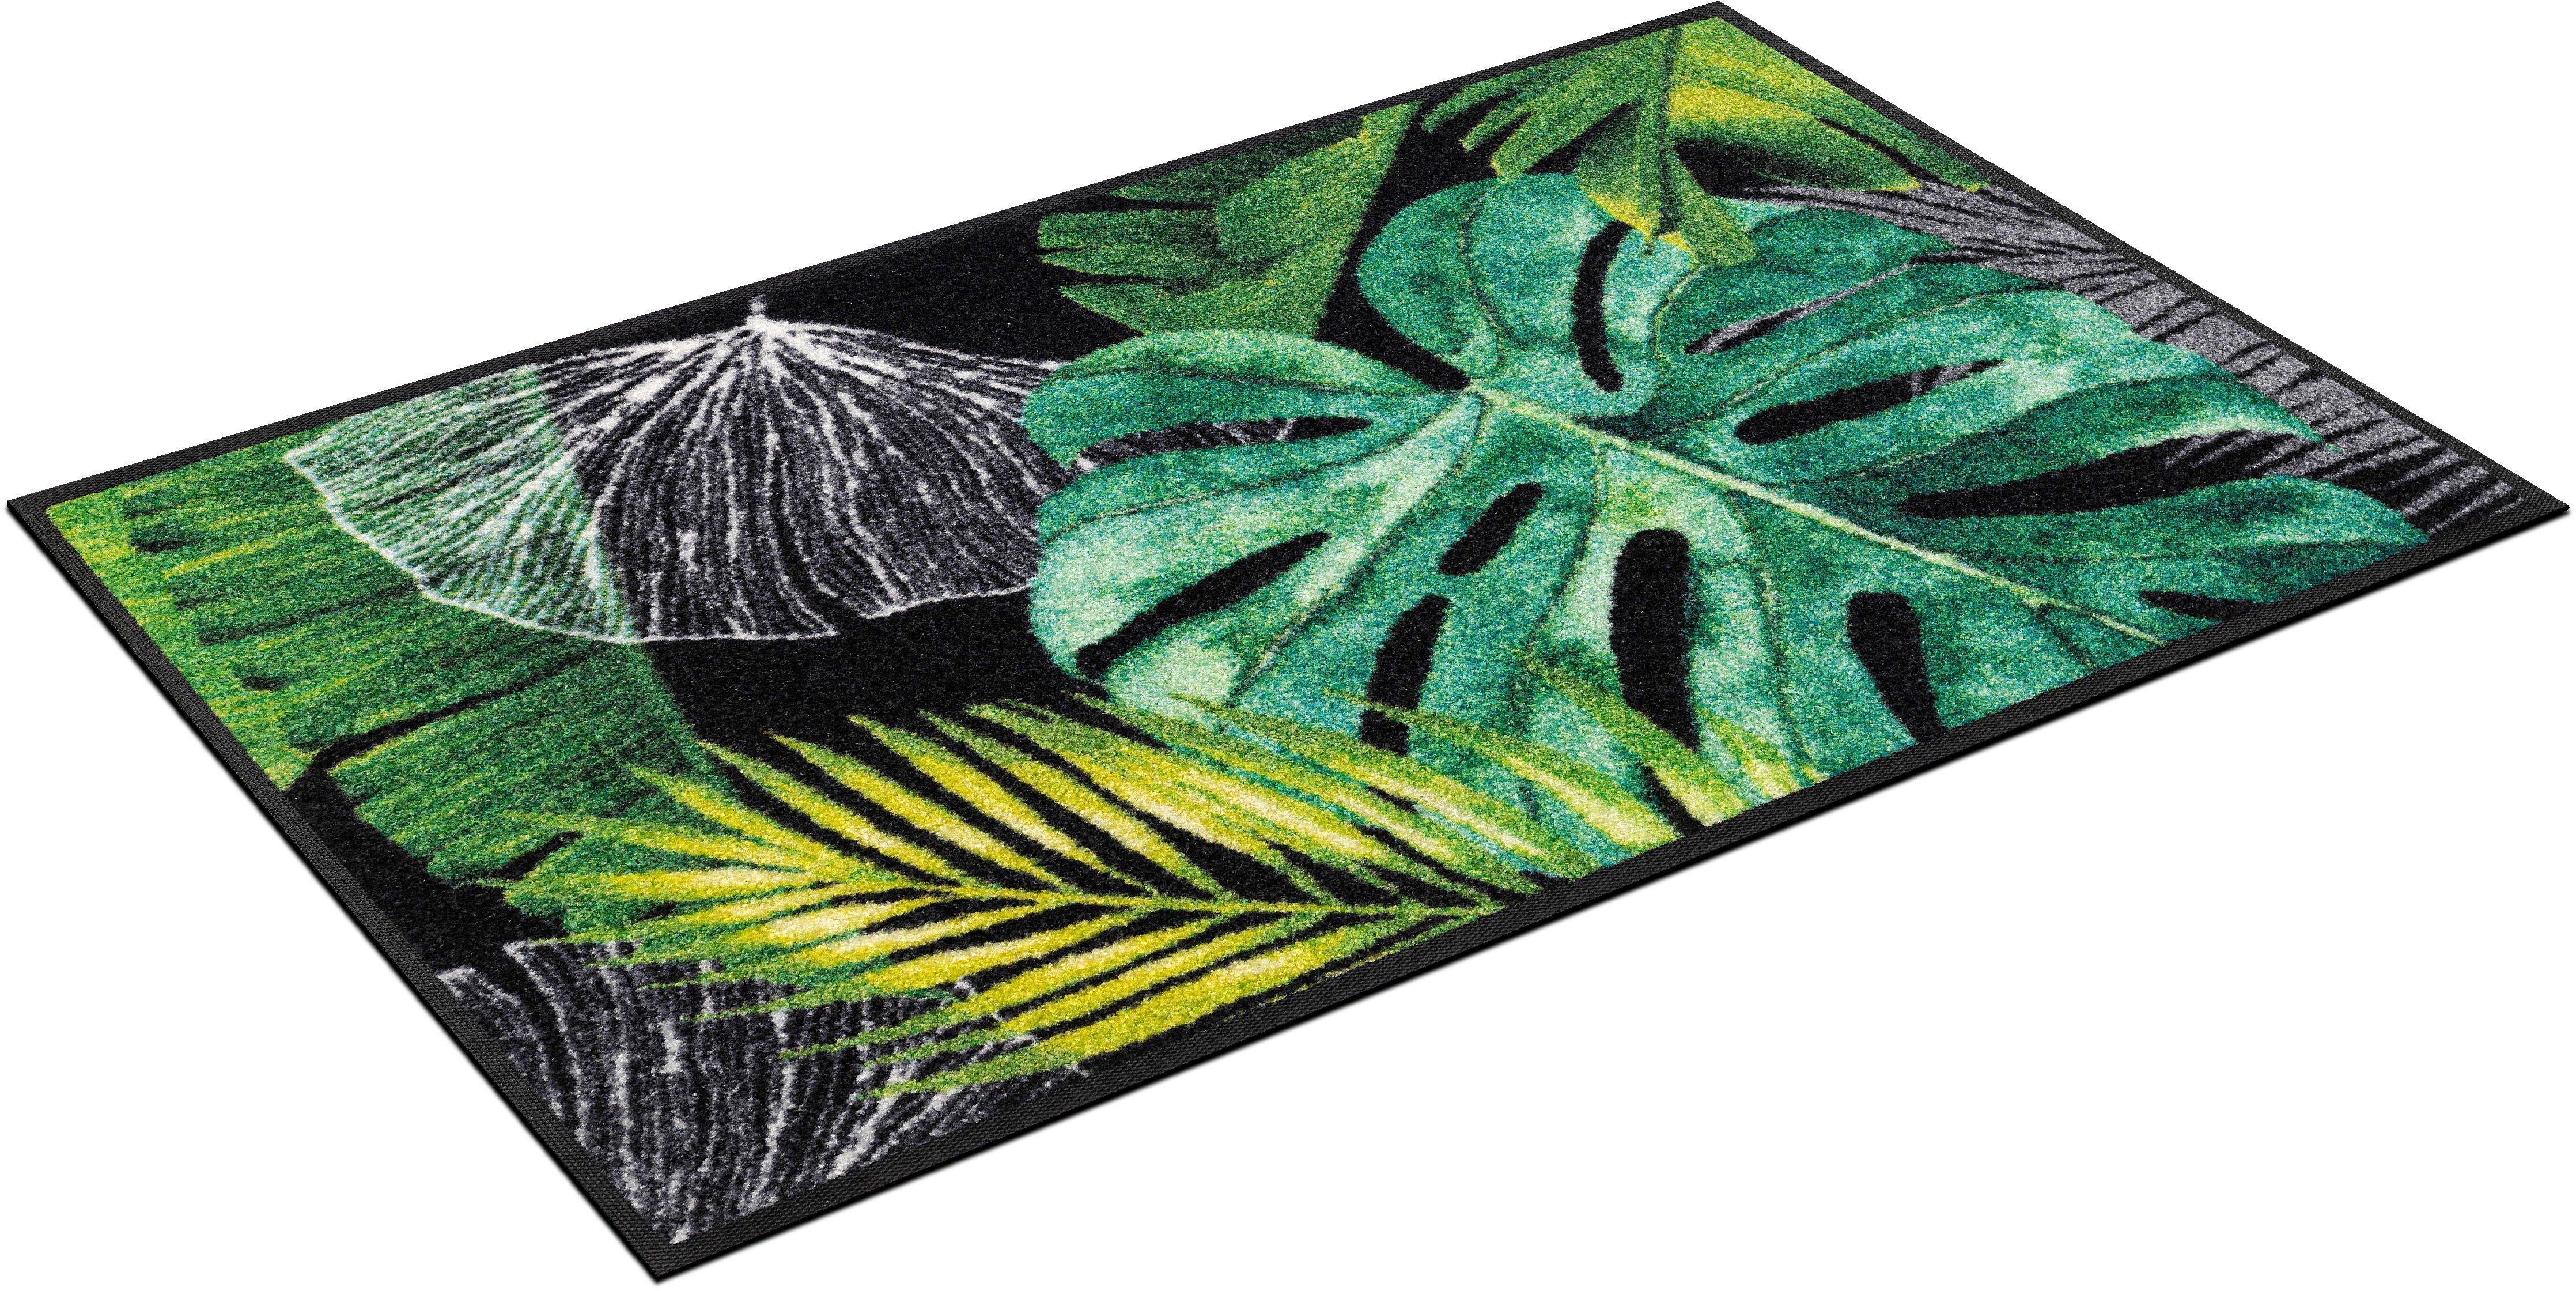 Fußmatte Neoflora, Wash+dih dich by kleen-tex, rechteckig, Höhe: 7 mm, Schmutzfangmatte, Motiv Blätter Monstera, rutschhemmend, waschbar